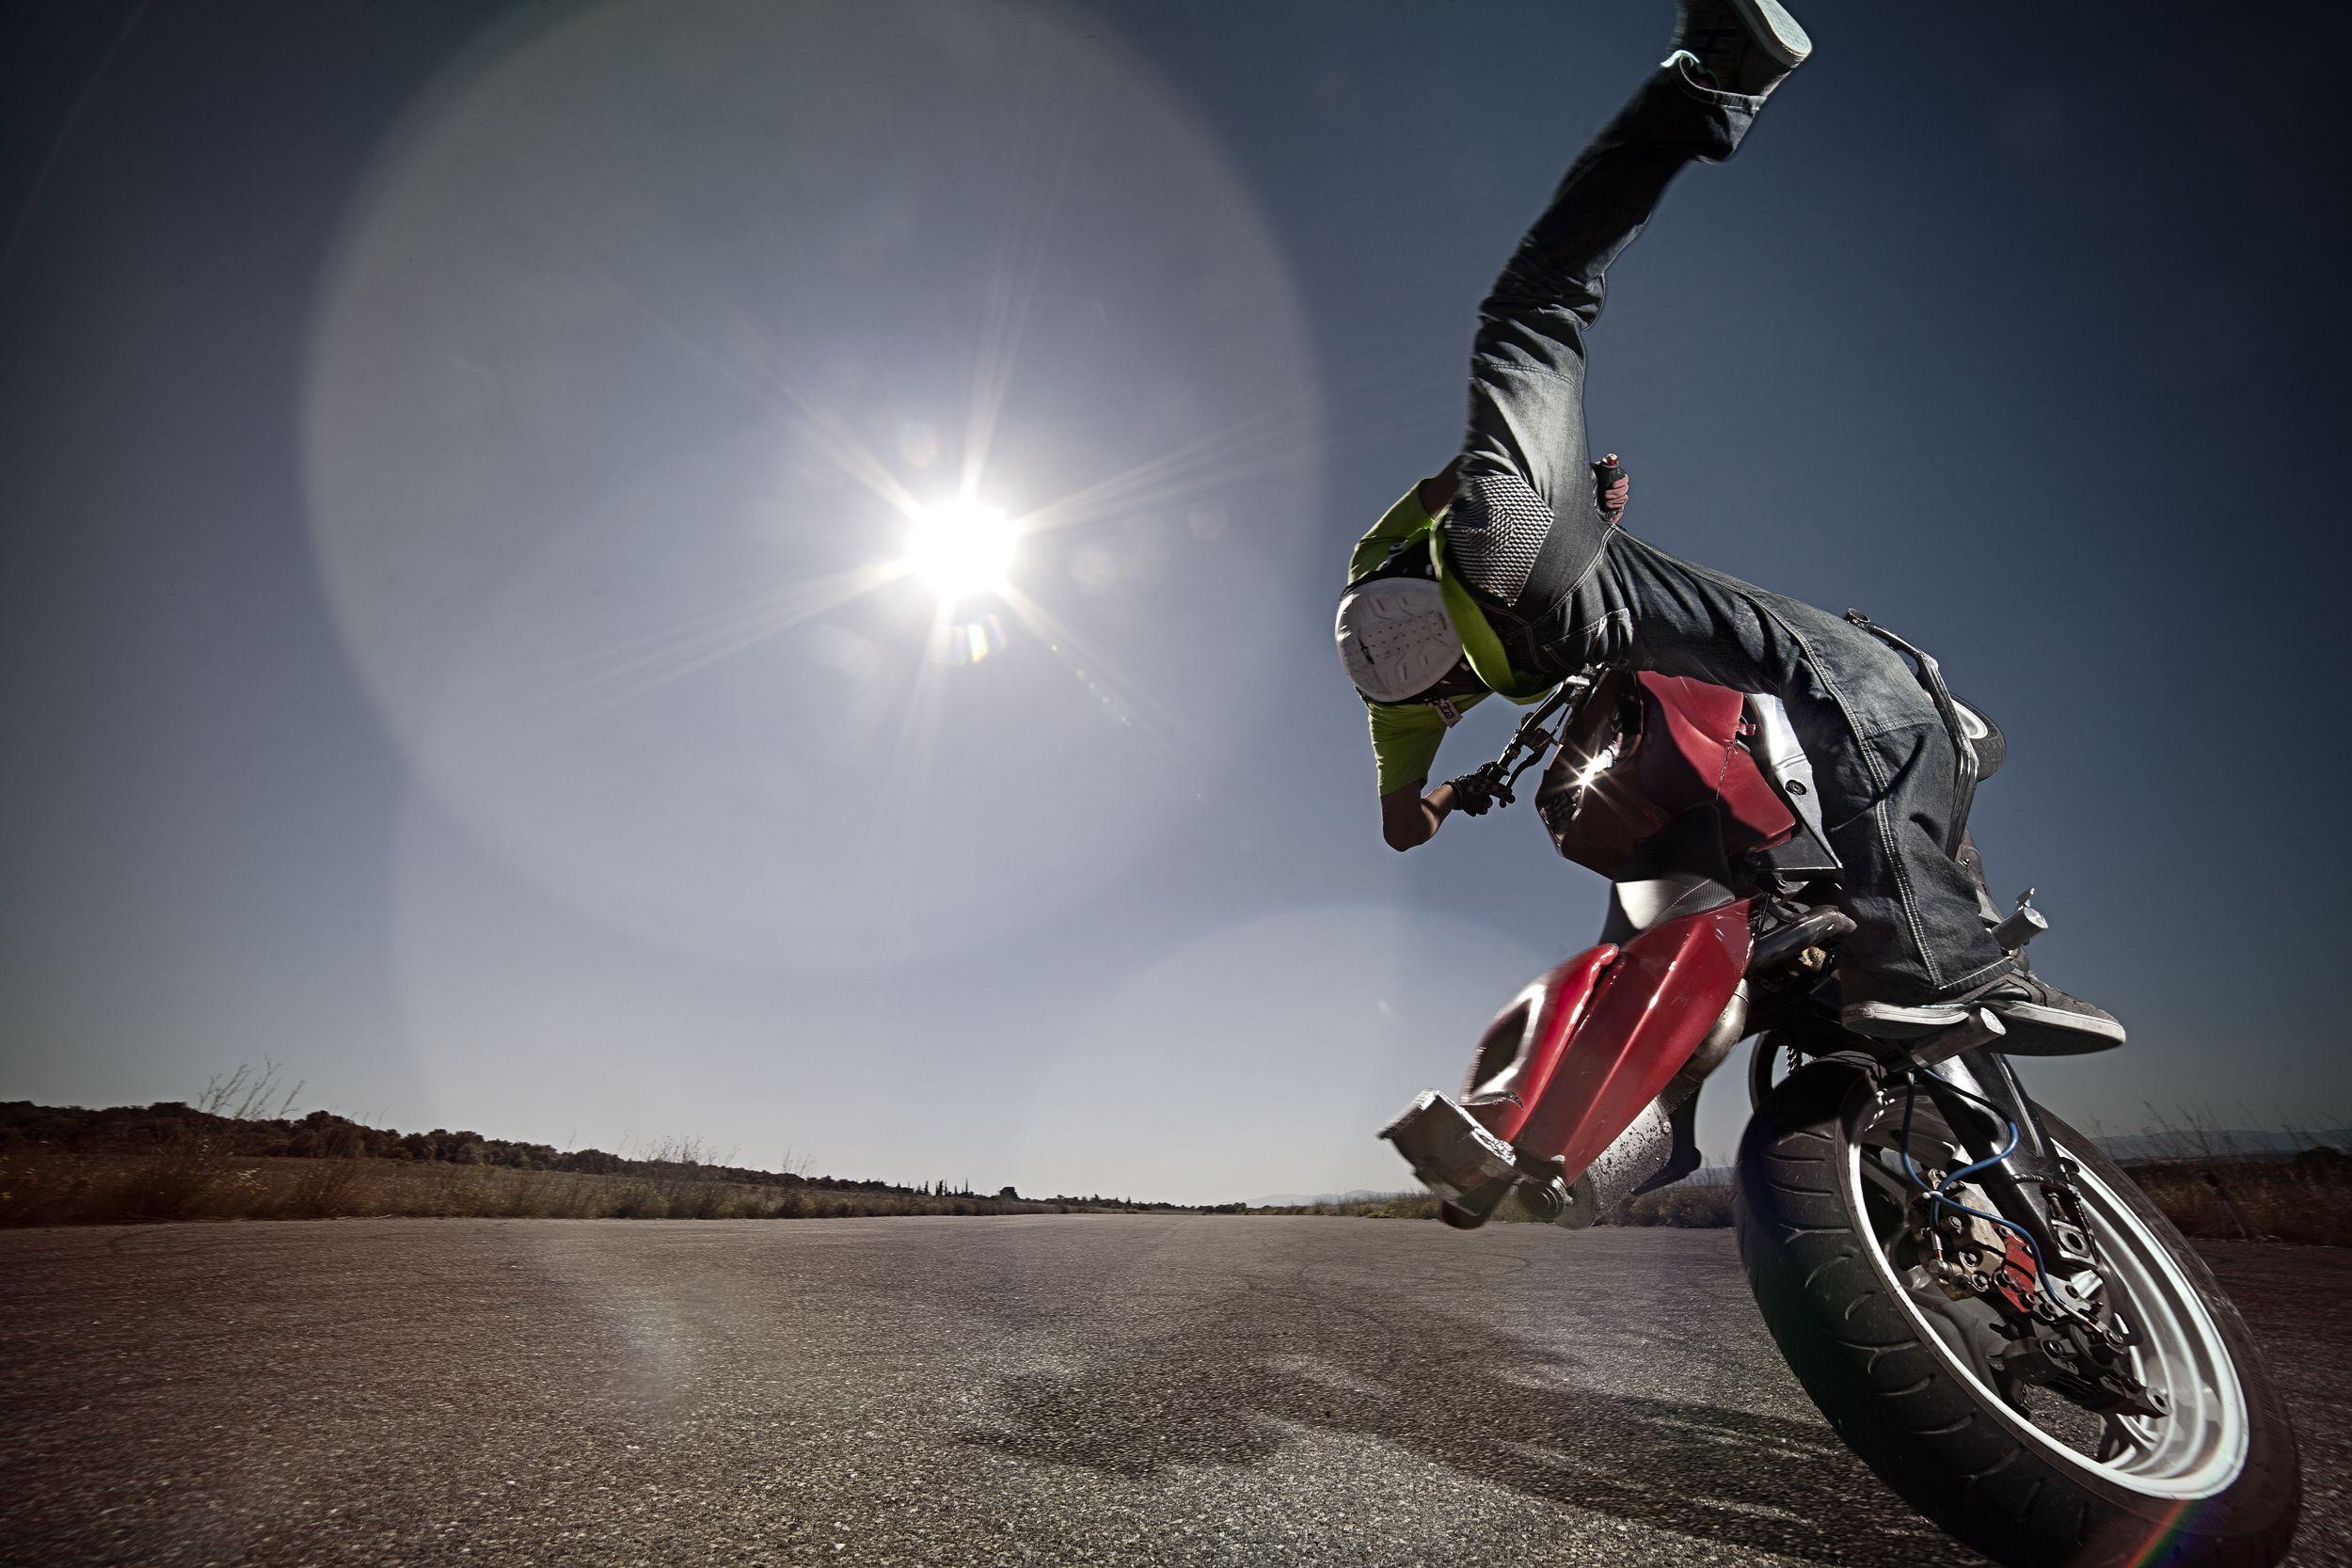 Motorbike stunt rider. Let's stunt: Great